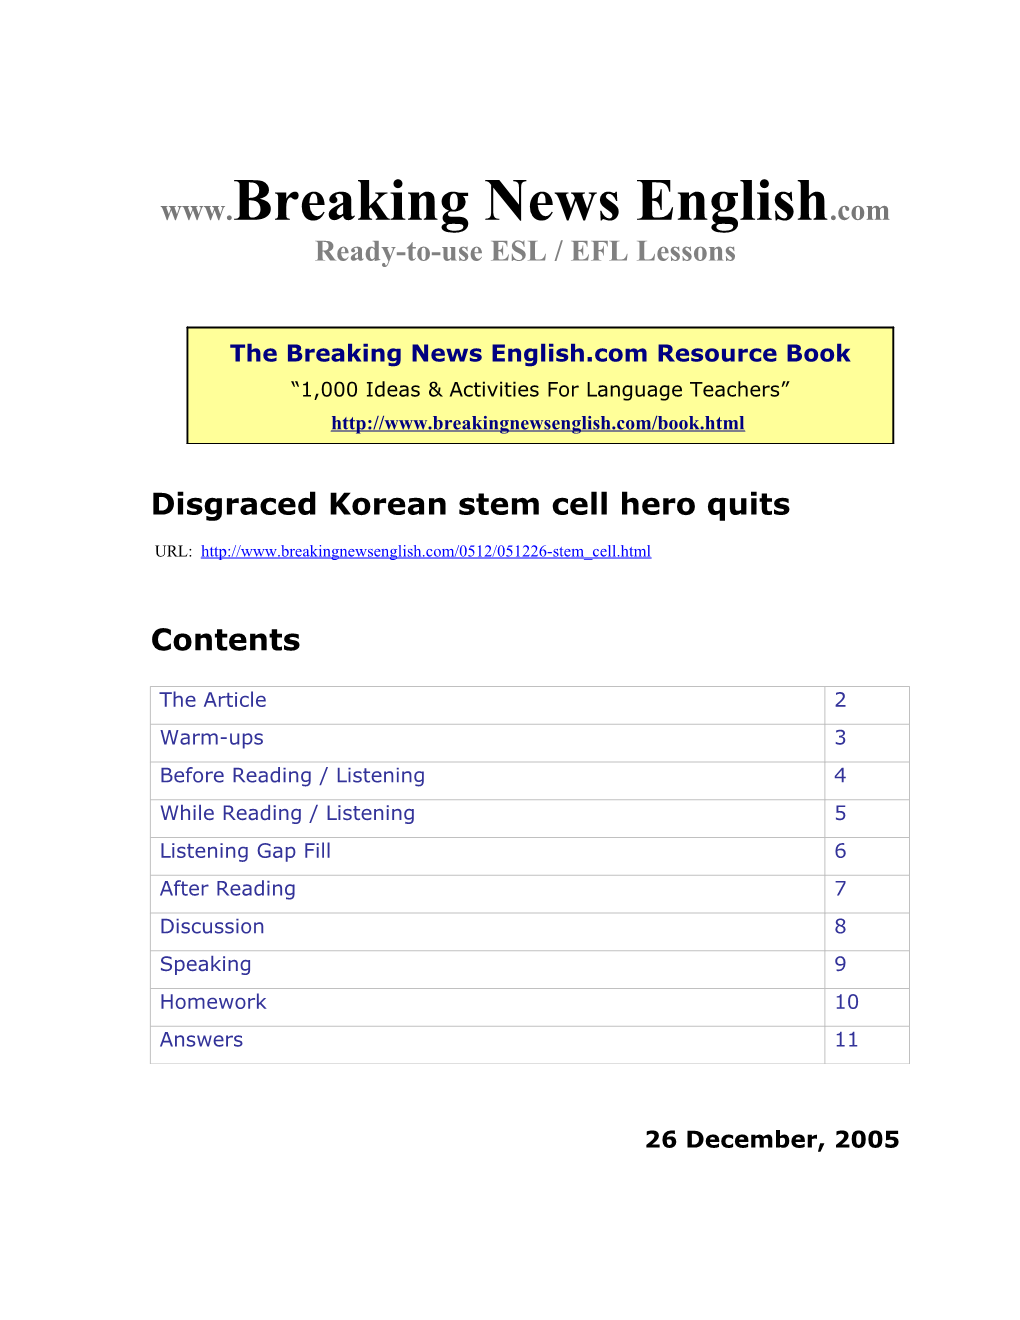 Disgraced Korean Stem Cell Hero Quits